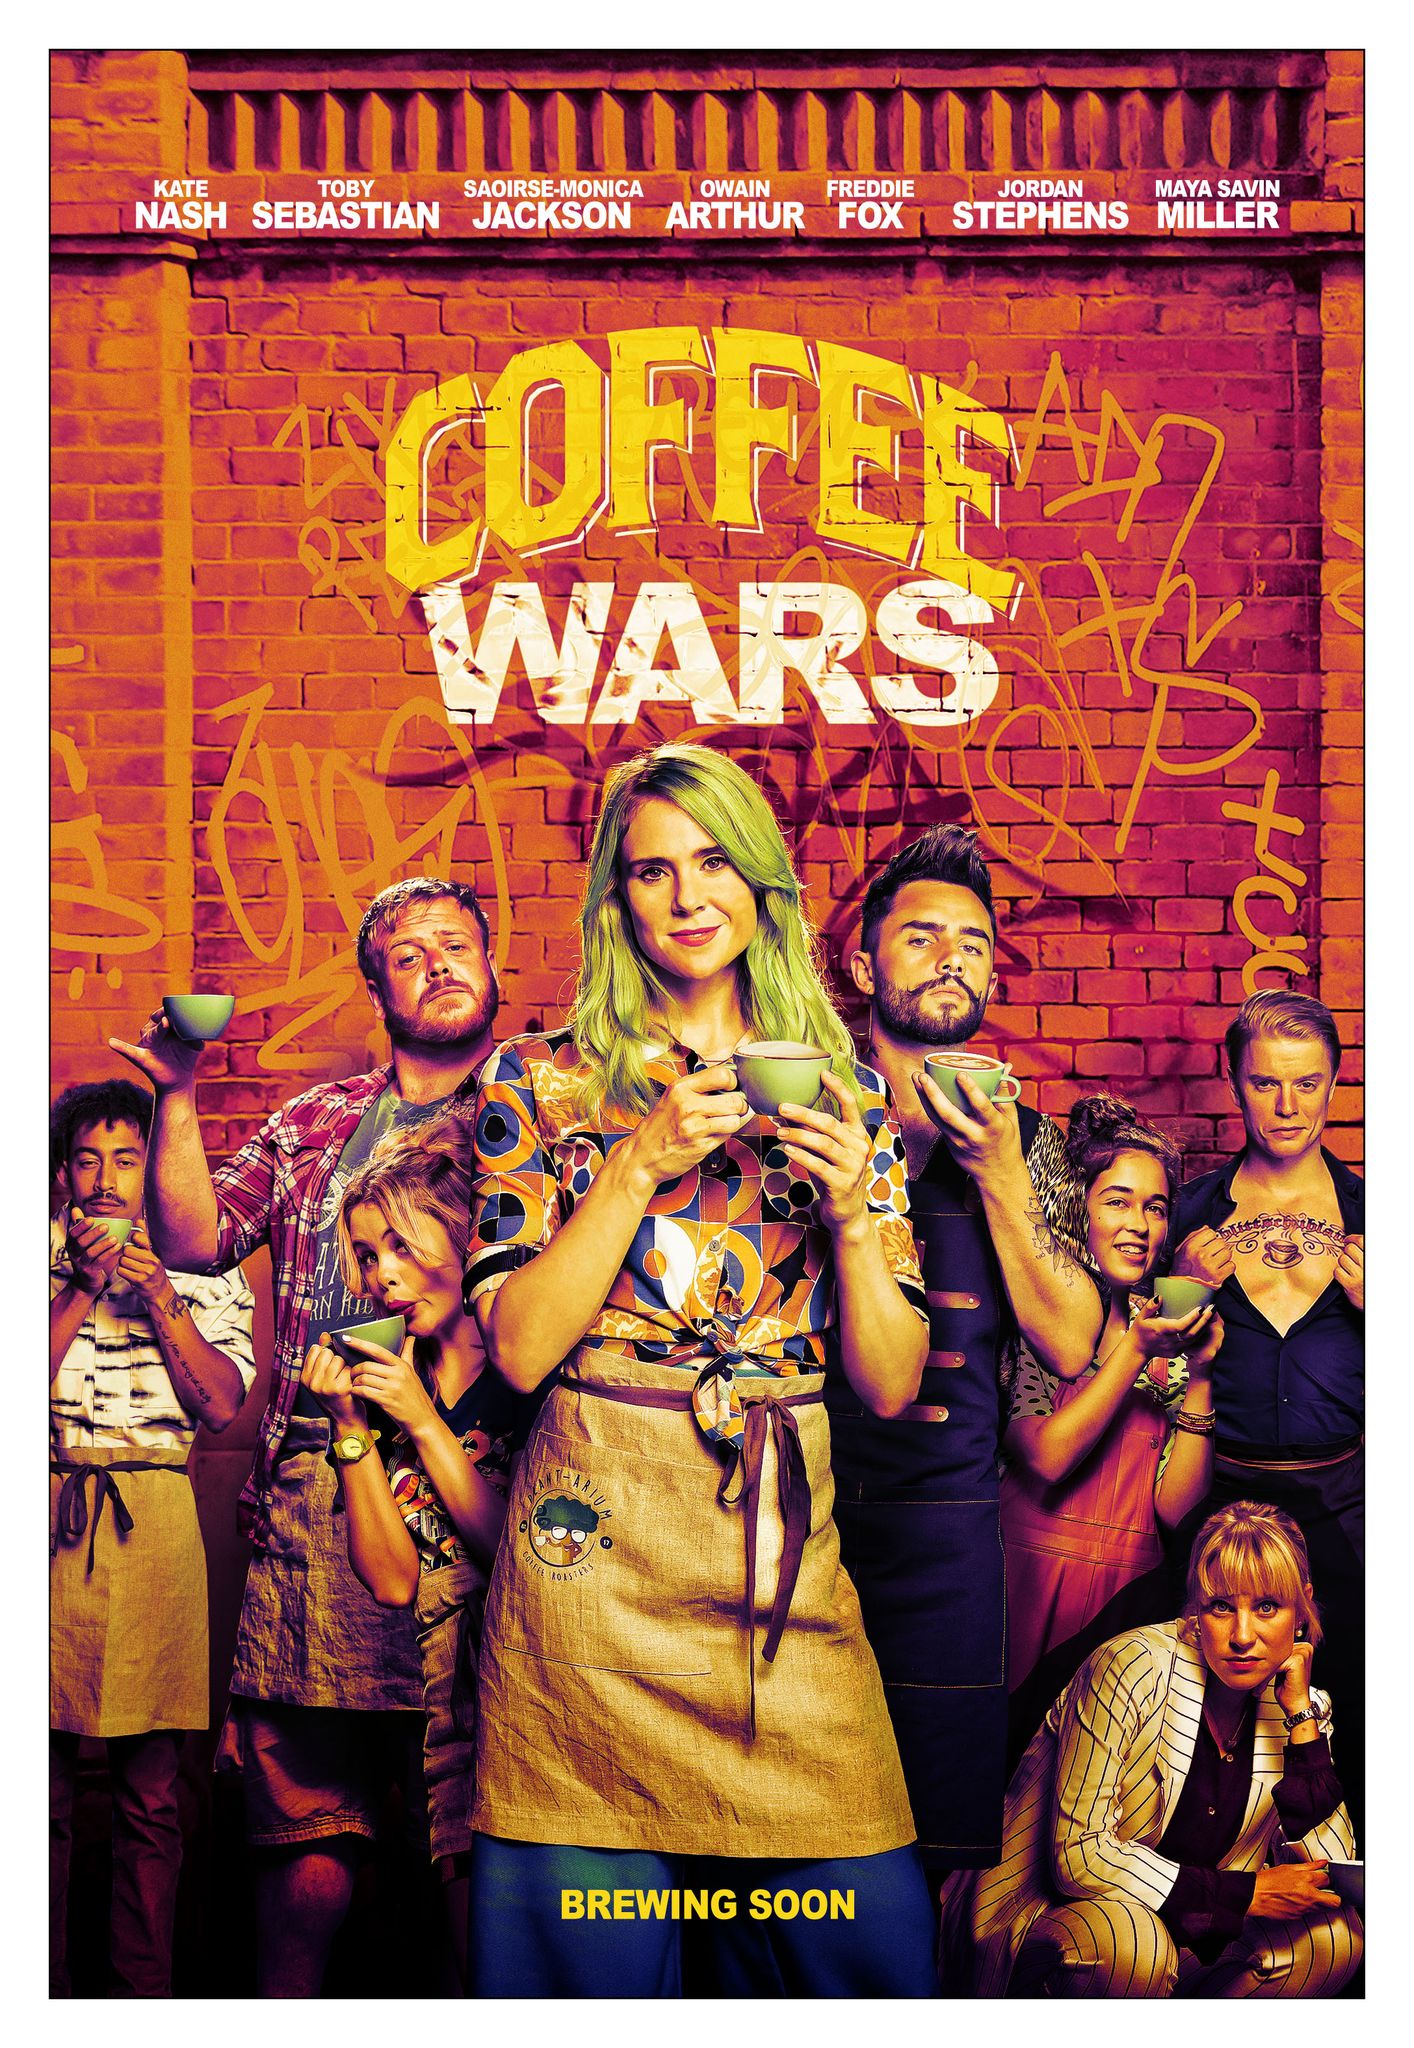 Coffee Wars movie characters holding coffee